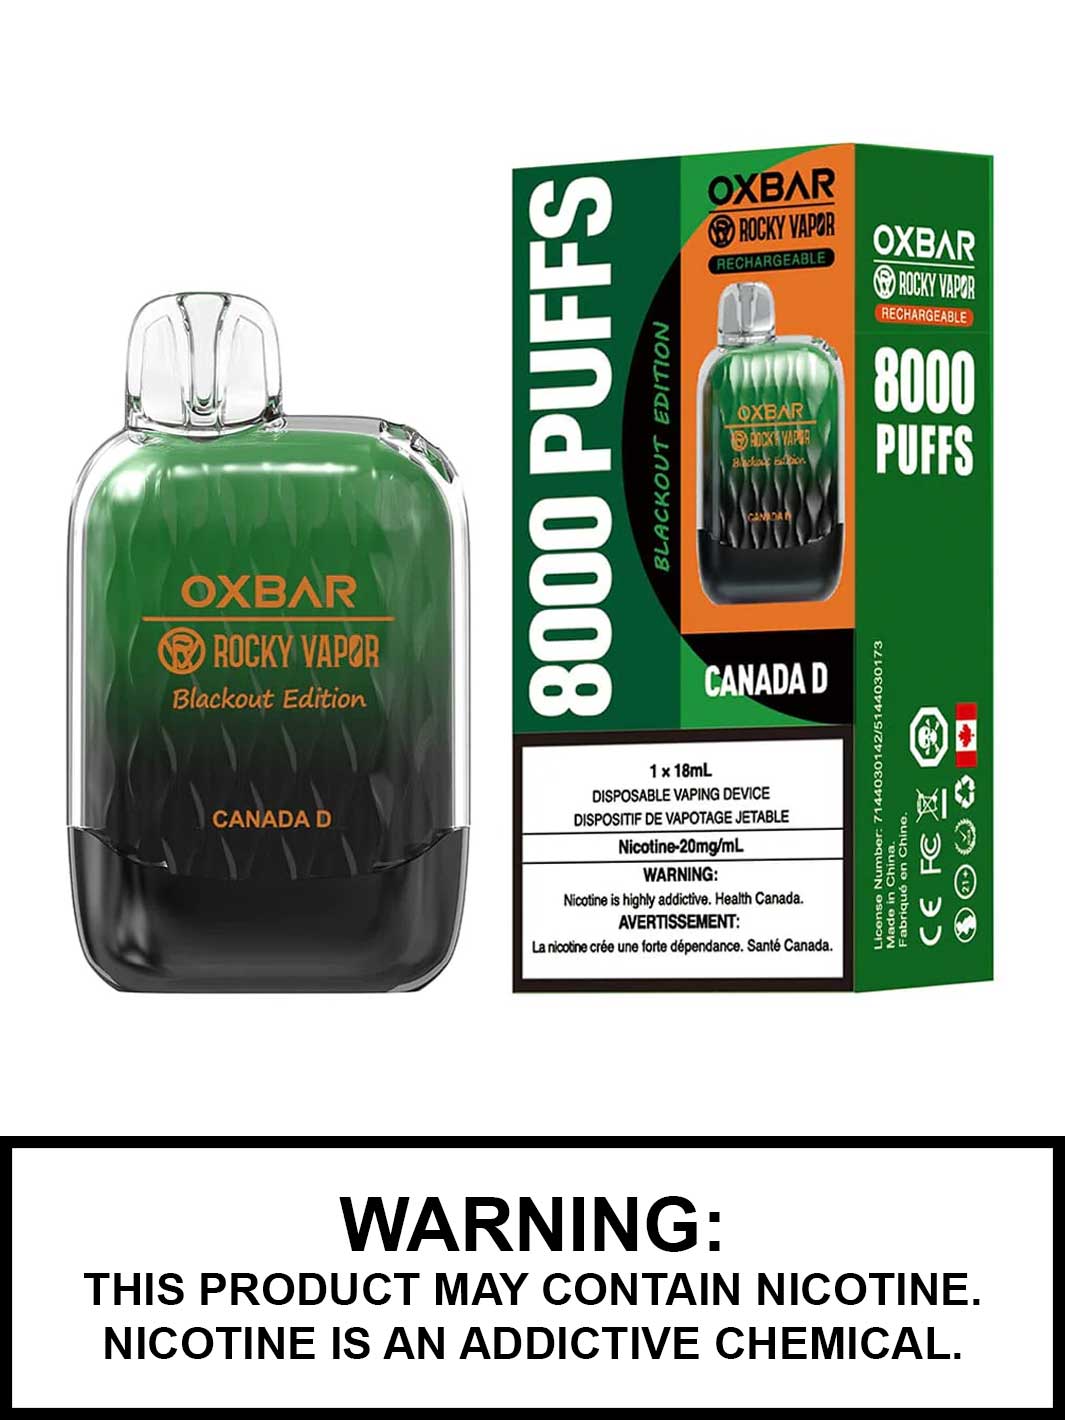 Canada D Oxbar Disposable Vape, Oxbar G8000 Vape, Oxbar x Rocky Vapor, Vape360 Canada